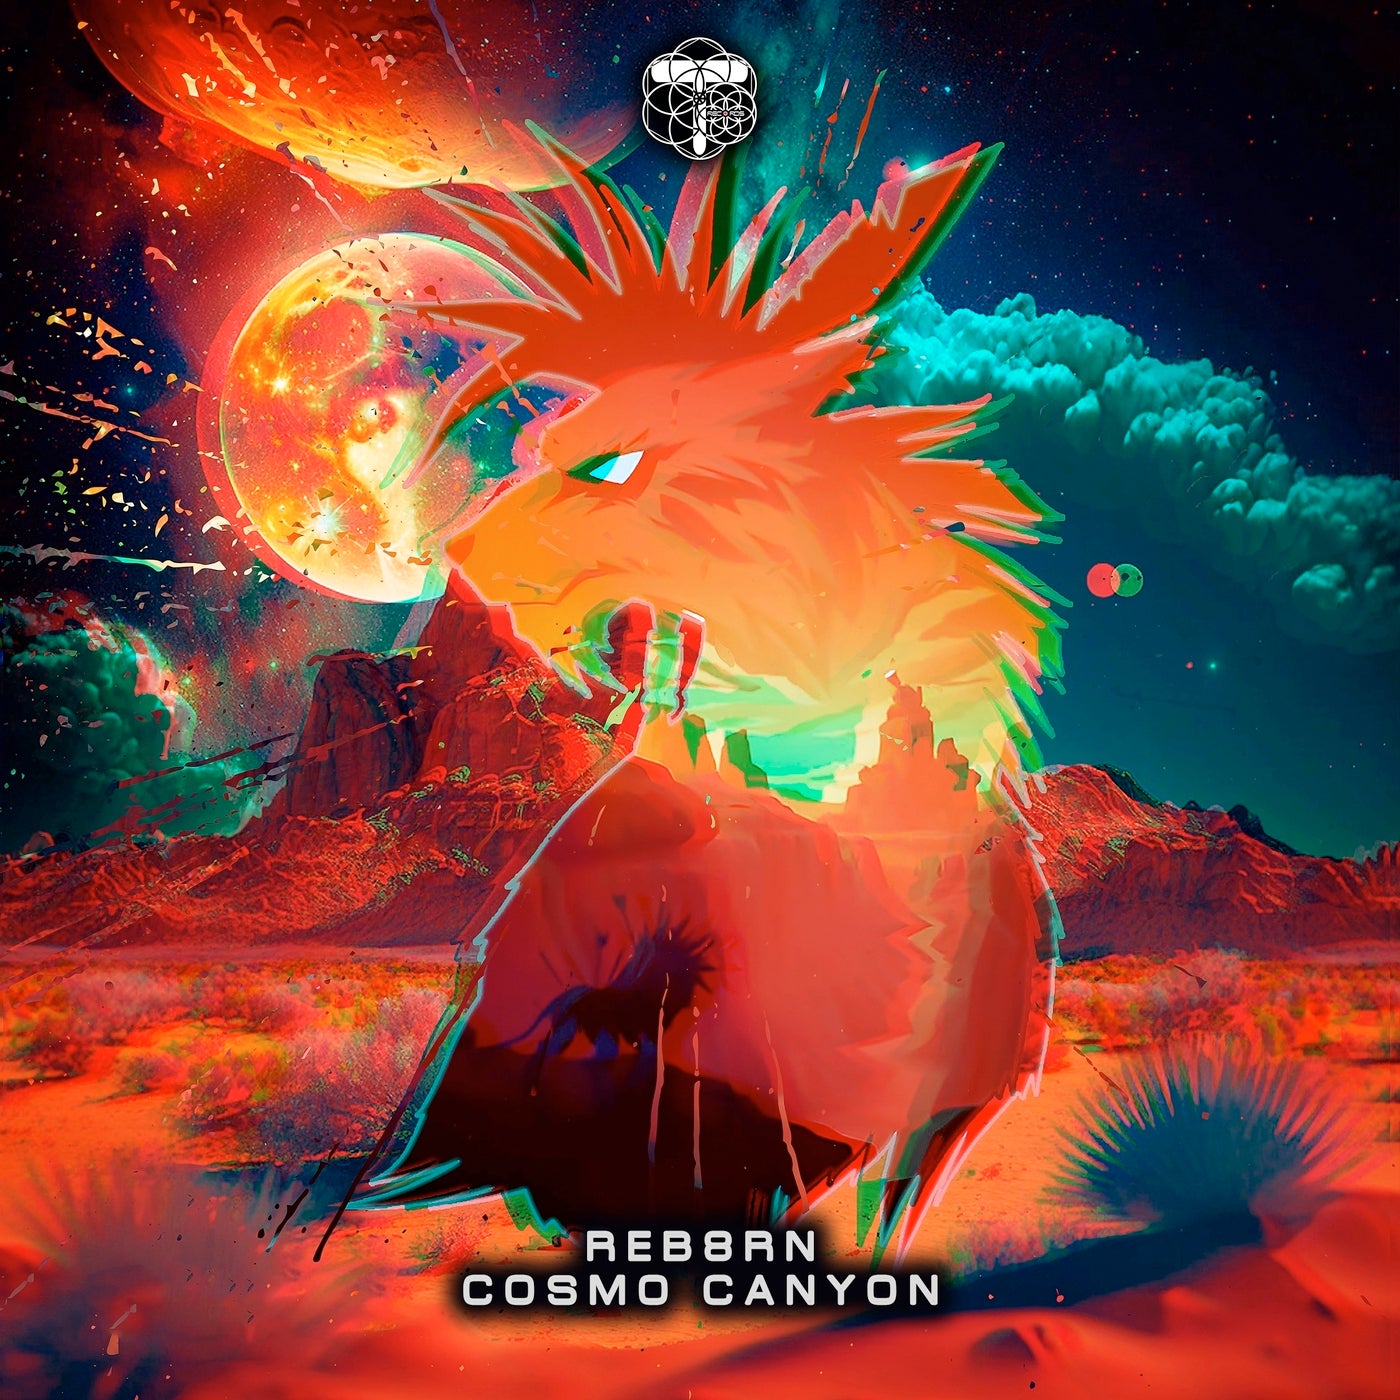 Reb8rn - Cosmo Canyon [Trancedencya Records]